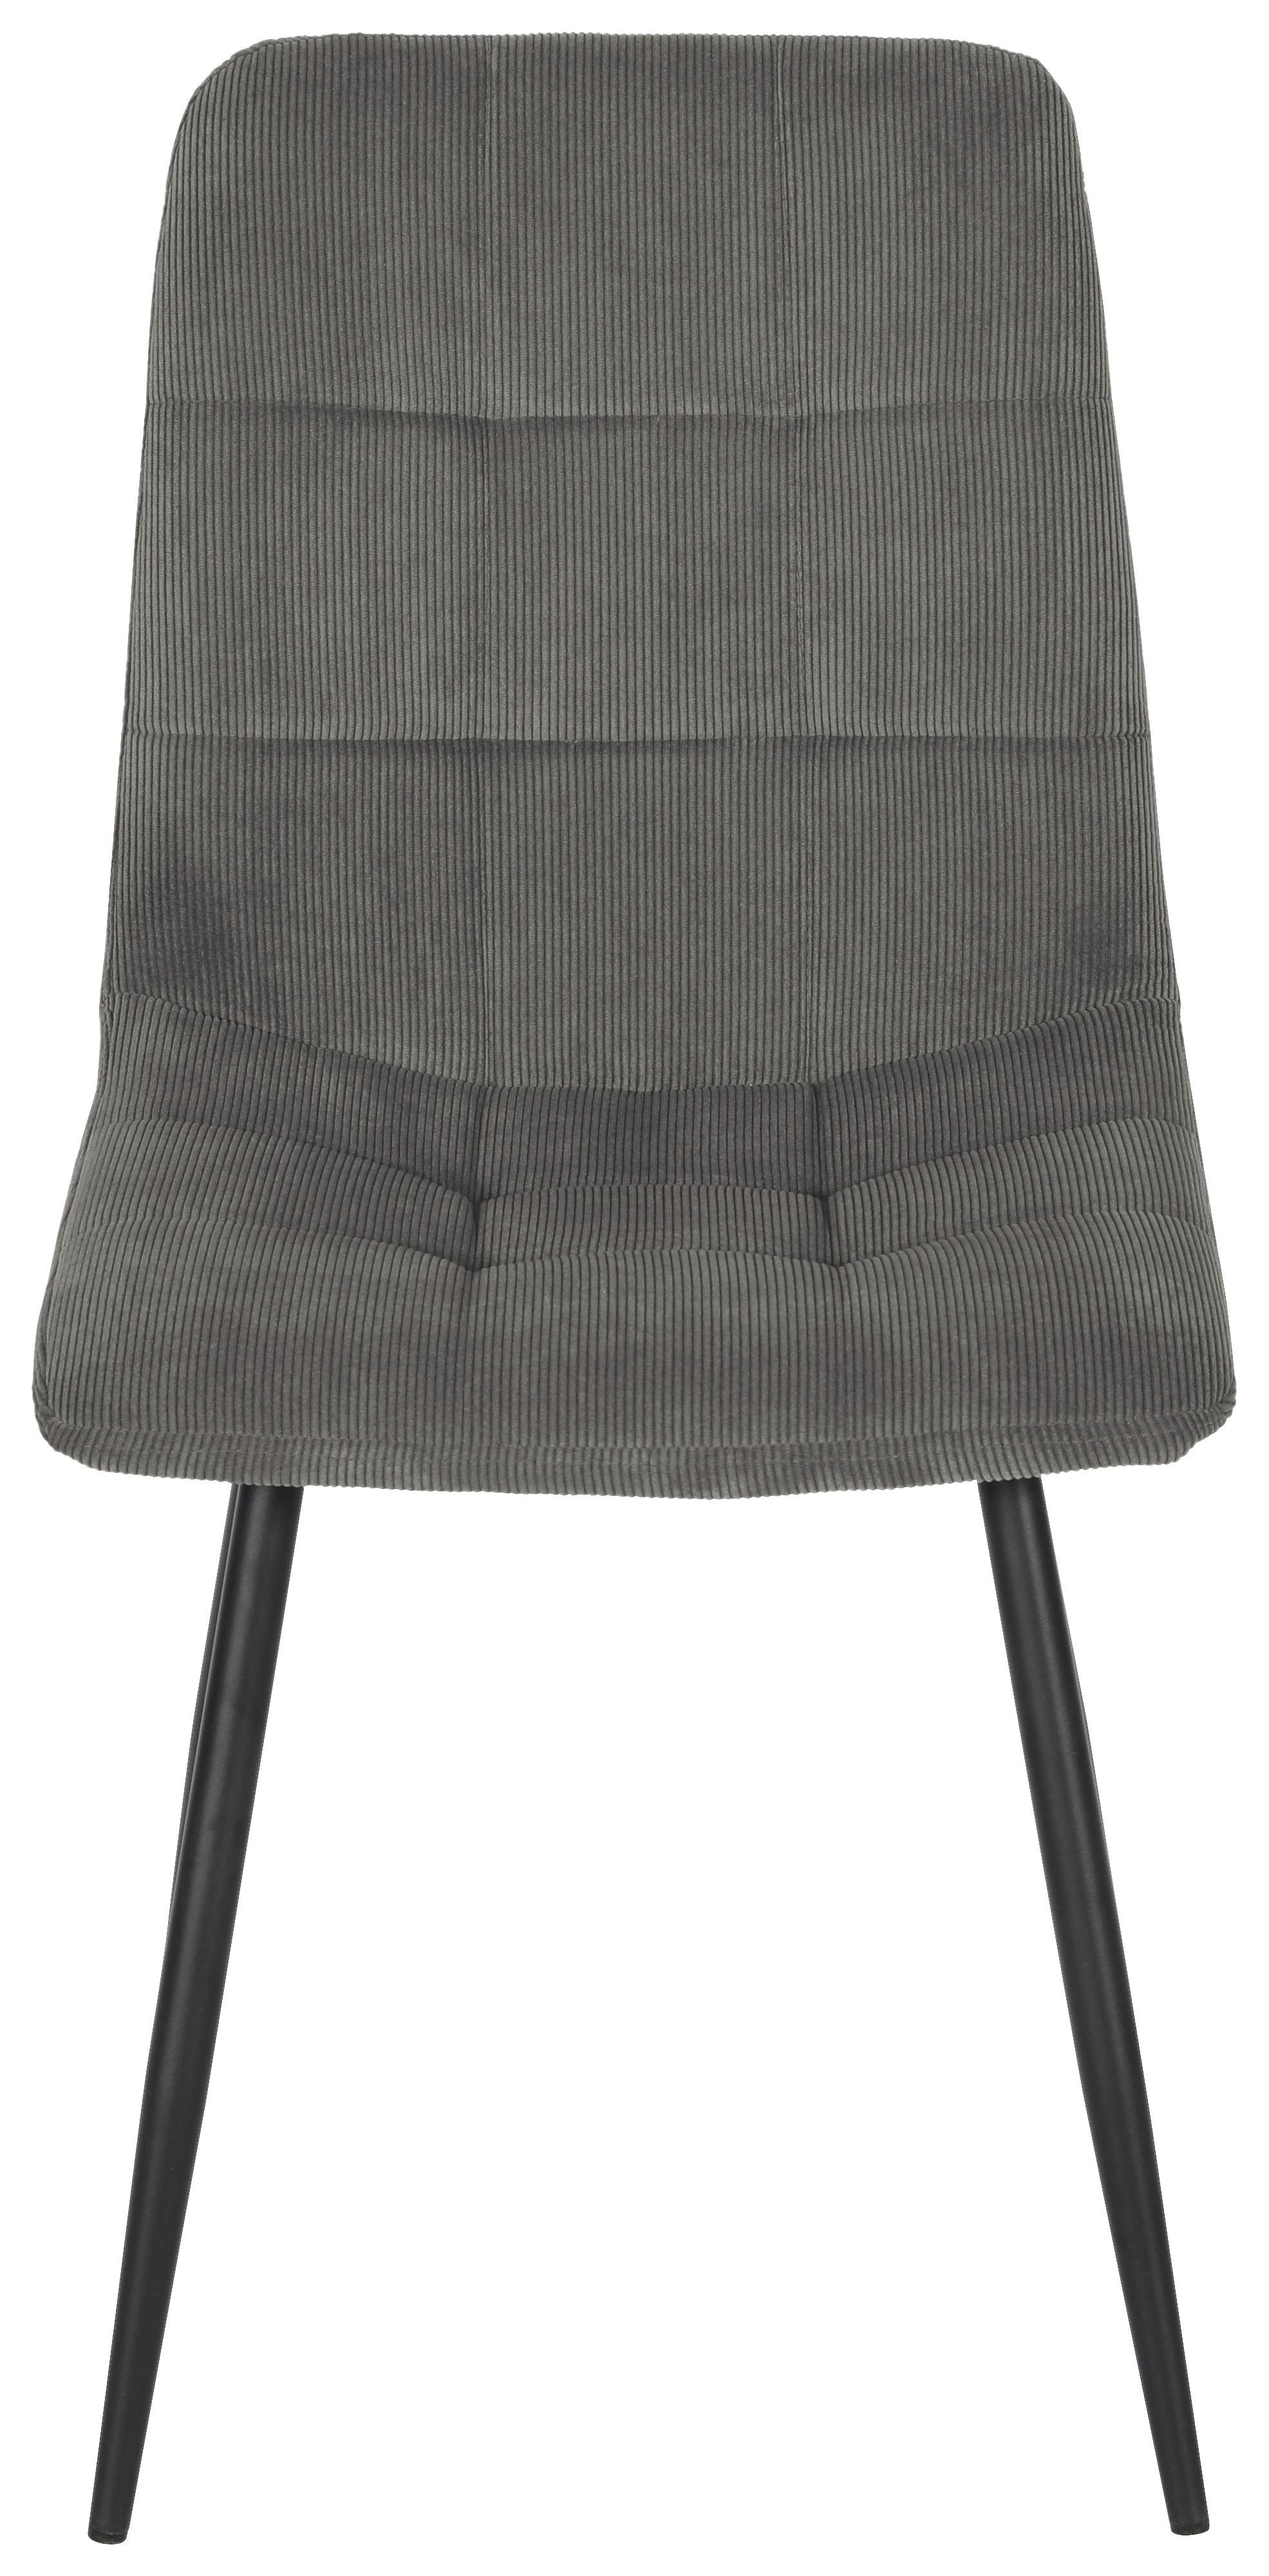 Židle Nino - šedá/černá, Moderní, kov/dřevo (45/87/57cm) - Modern Living